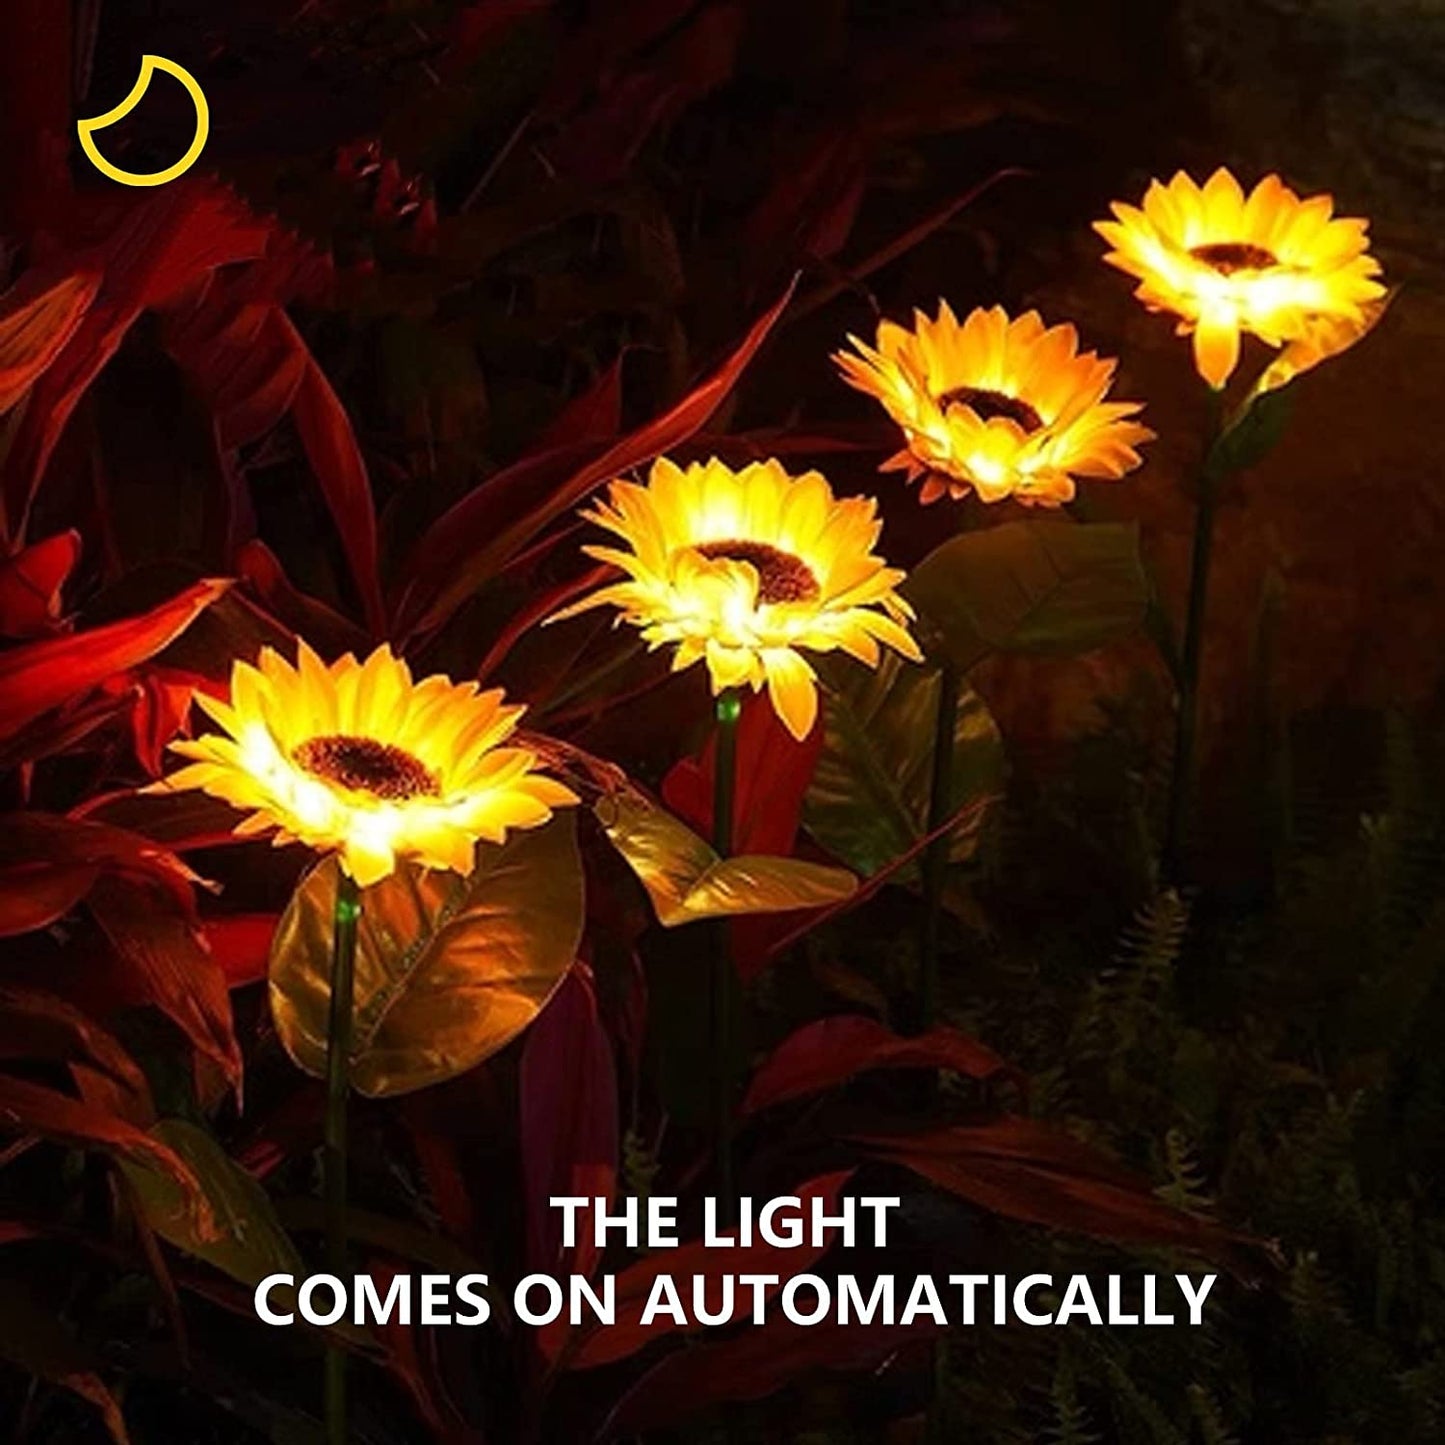 Everlasting Glow-In-The-Dark Solar Sunflower Lights